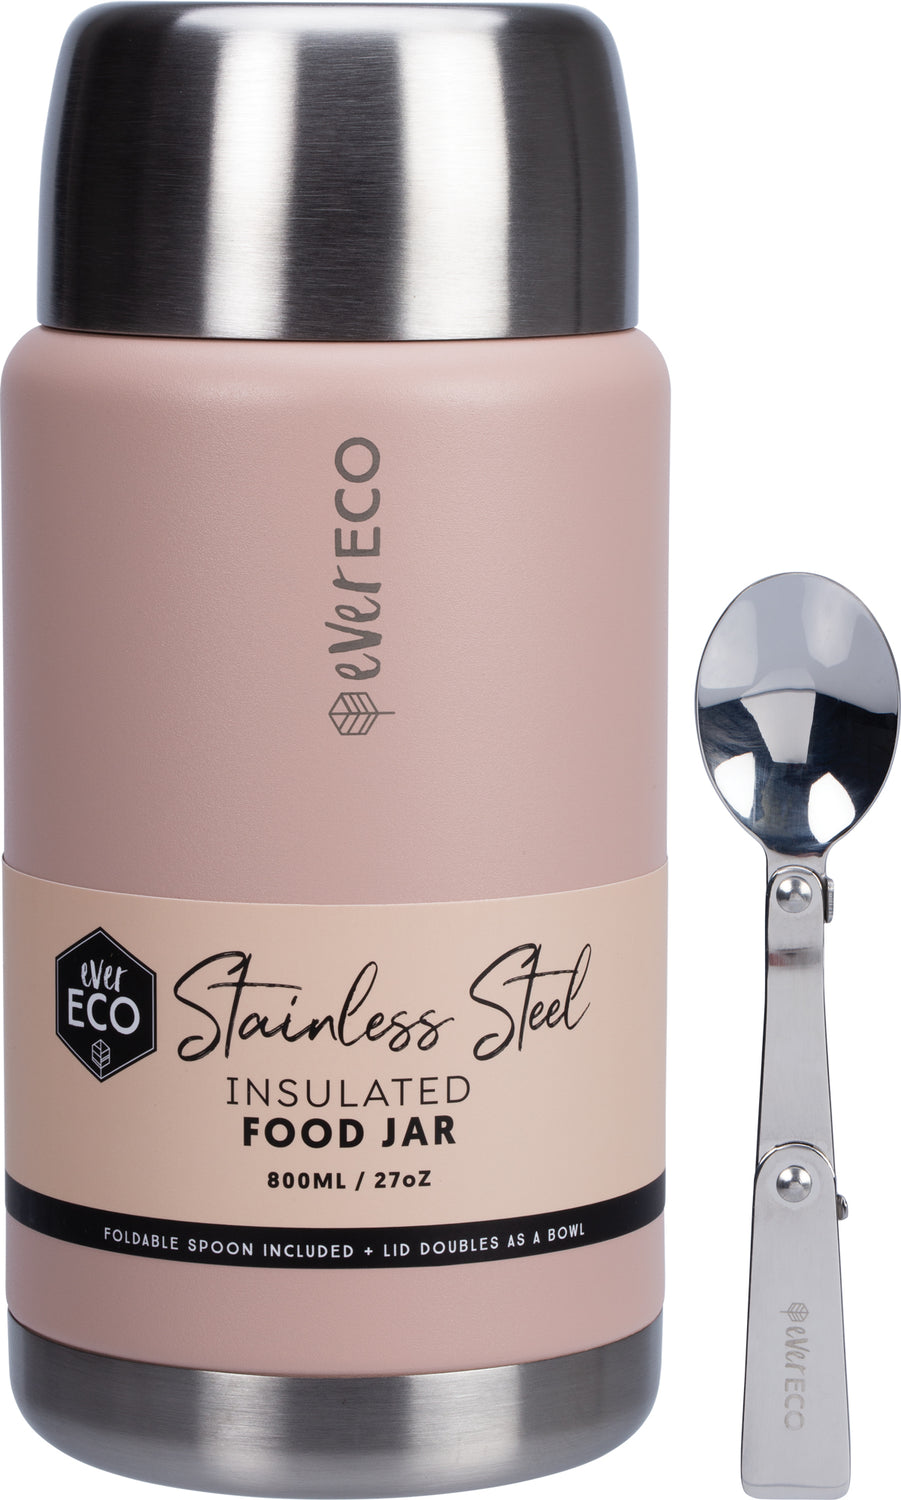 Ever Eco Insulated Food Jar Rose - 800ml